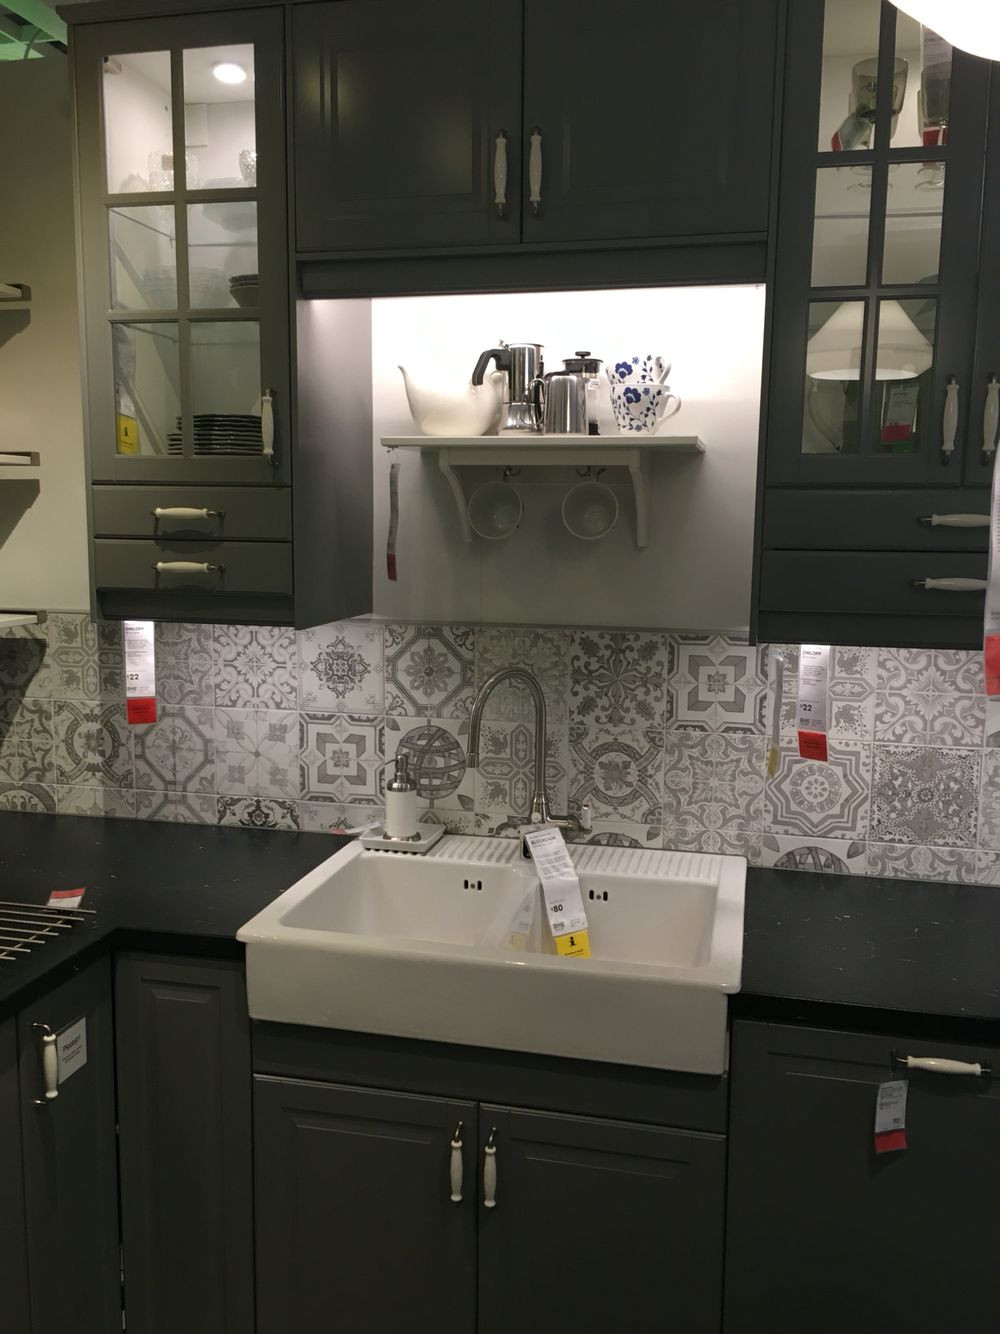 Ikea Kitchen Tiles
 IKEA bodbyn kitchen with nikea style tiles